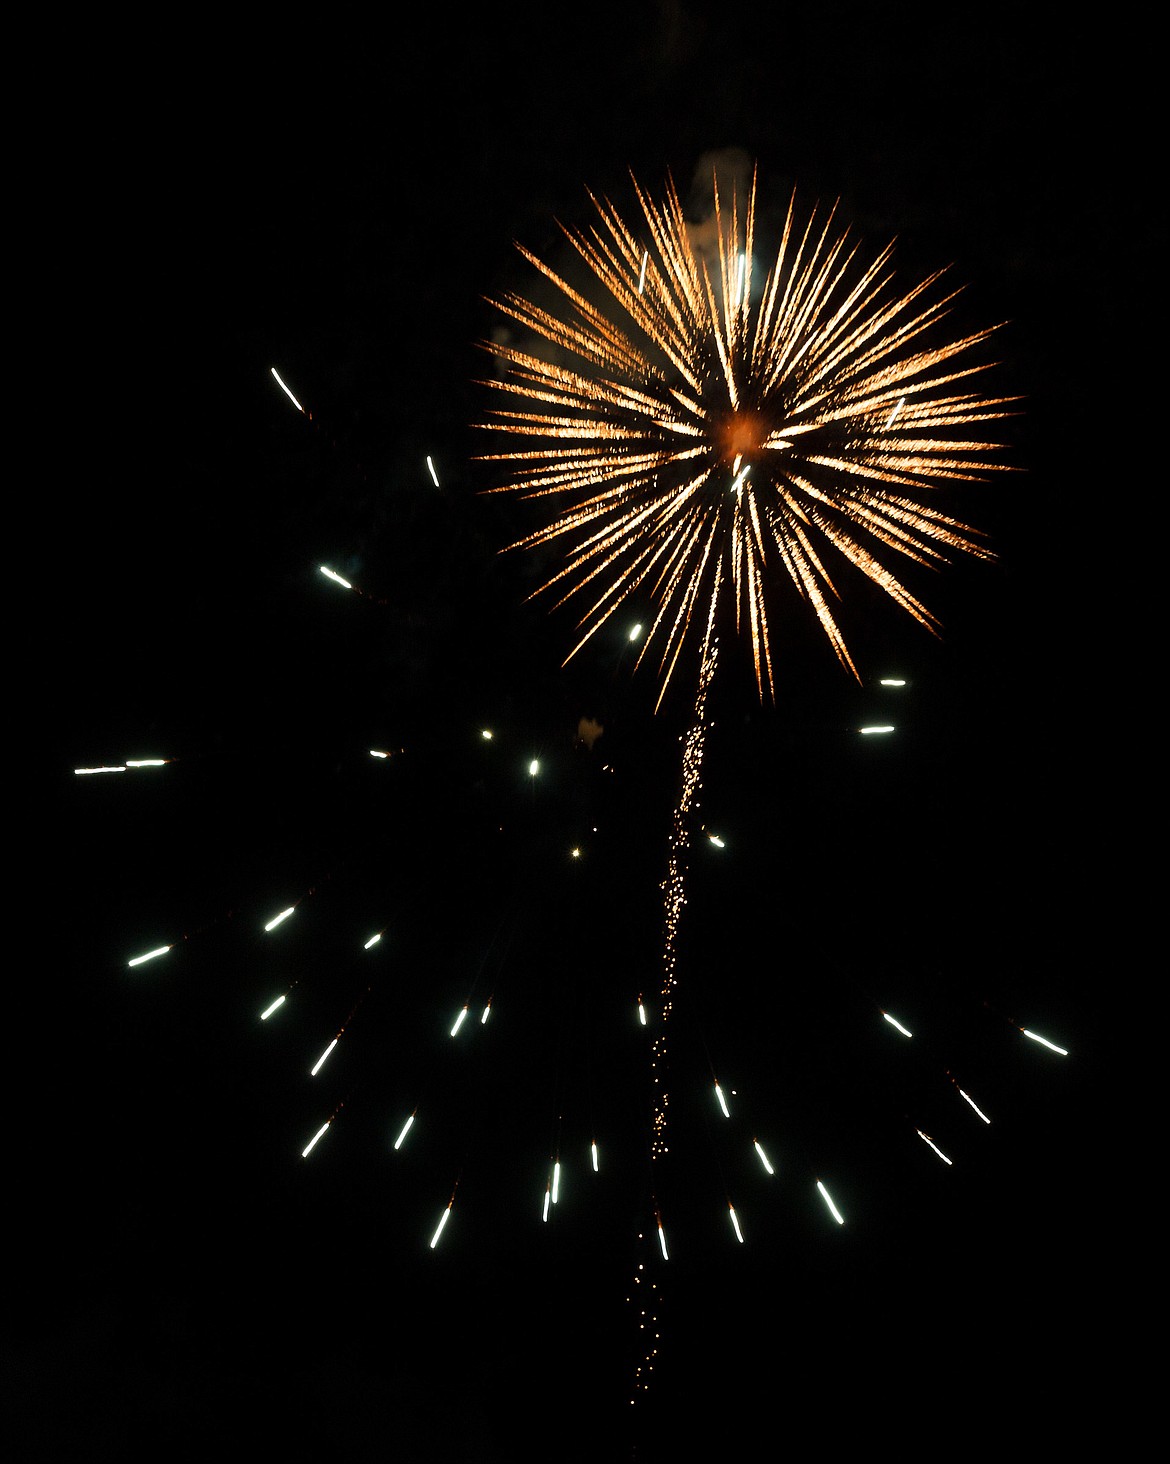 Fireworks explode above Roosevelt Park in Troy on July 4. (John Blodgett/The Western News)